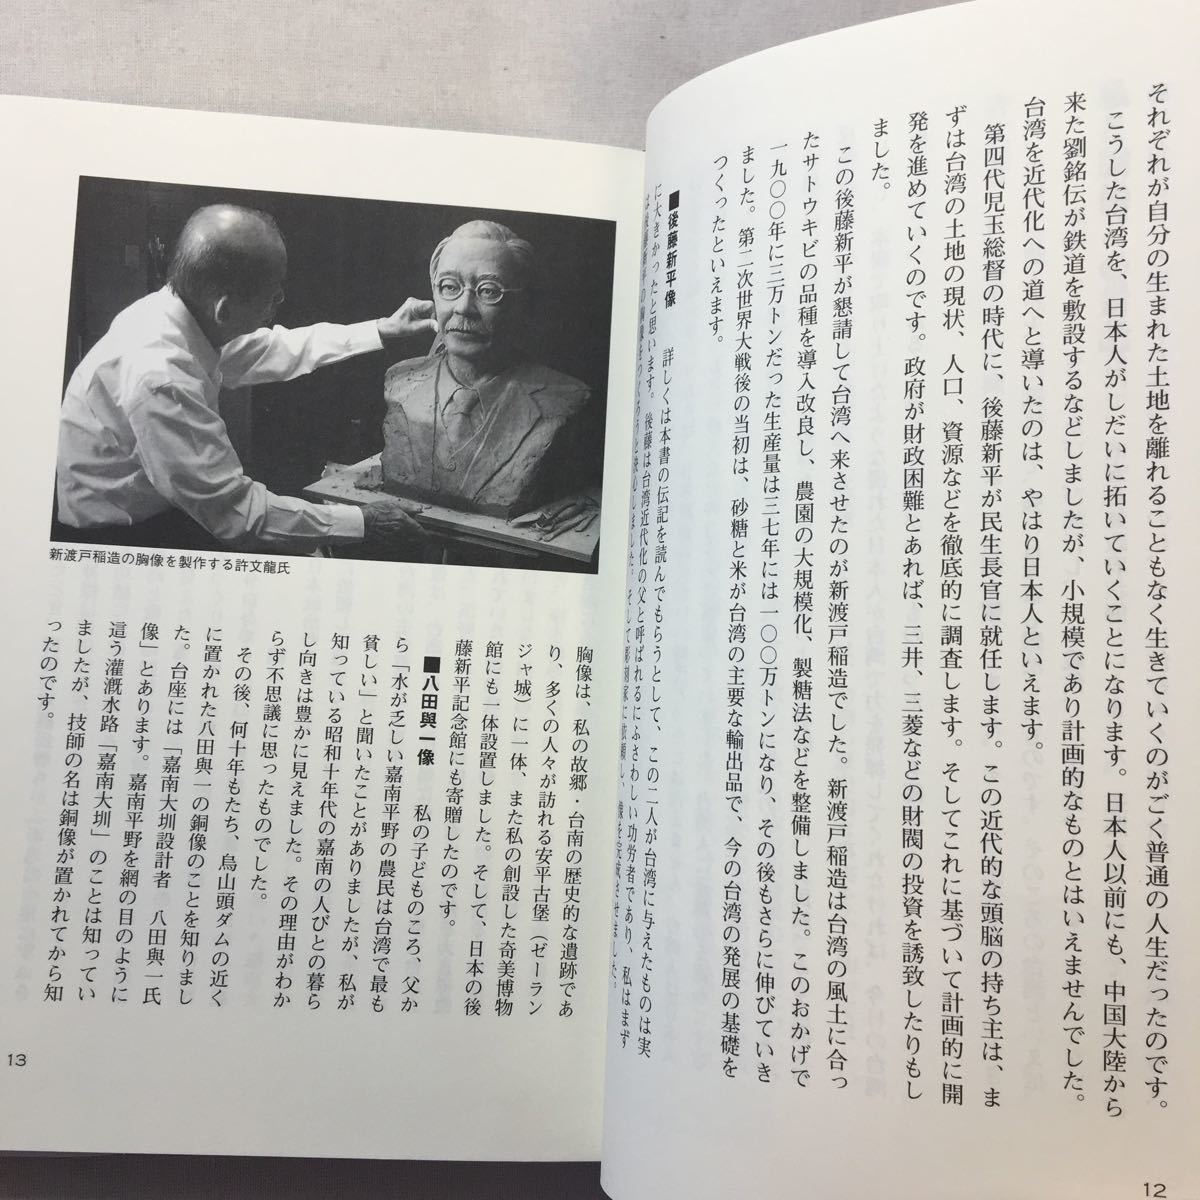 zaa-302♪日本人、台湾を拓く。―許文龍氏と胸像の物語 単行本 2013/1/1 まどか出版 (編集)